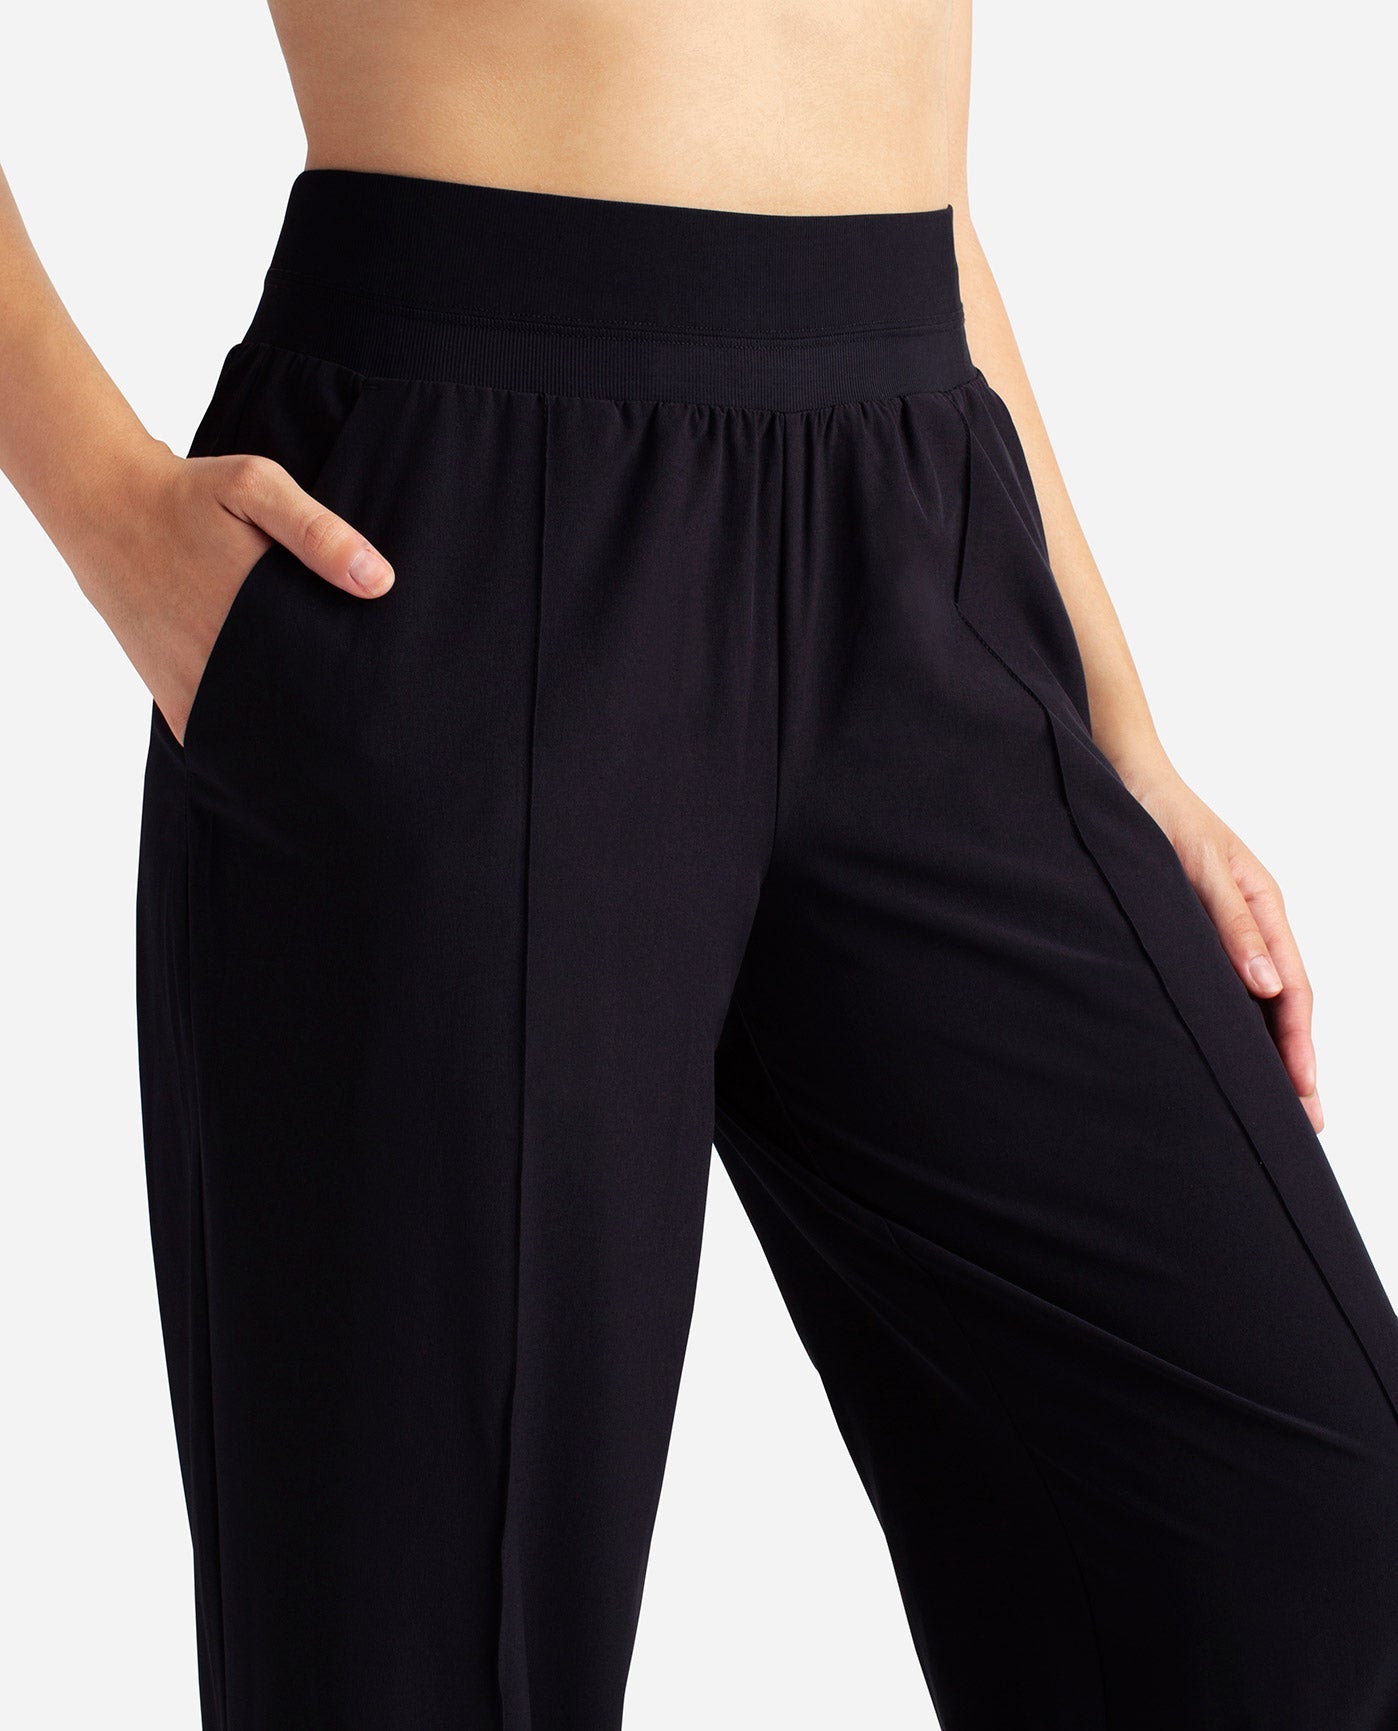 Women's Danskin Pants - at $12.75+